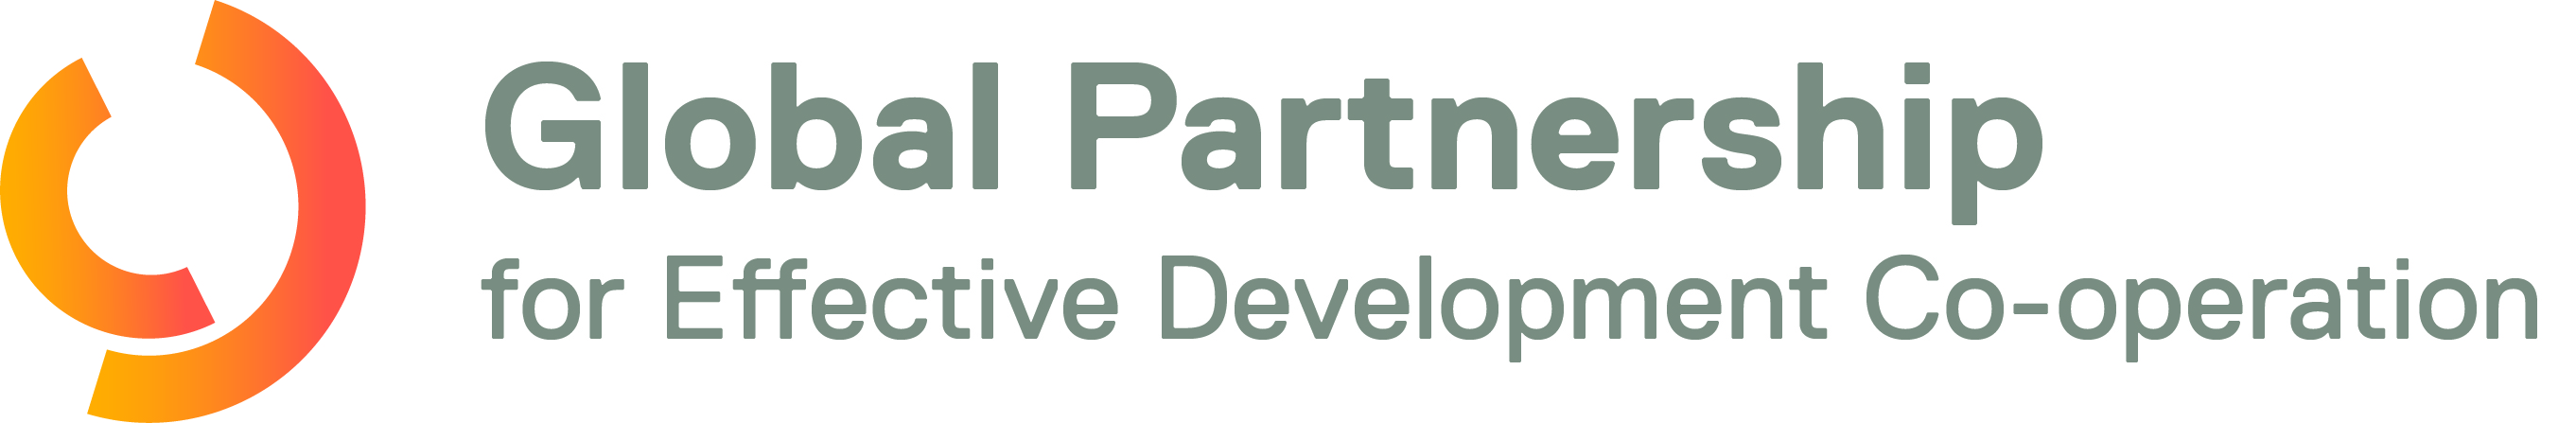 Global Partnership for Effective Development Co-operation (GPEDC)